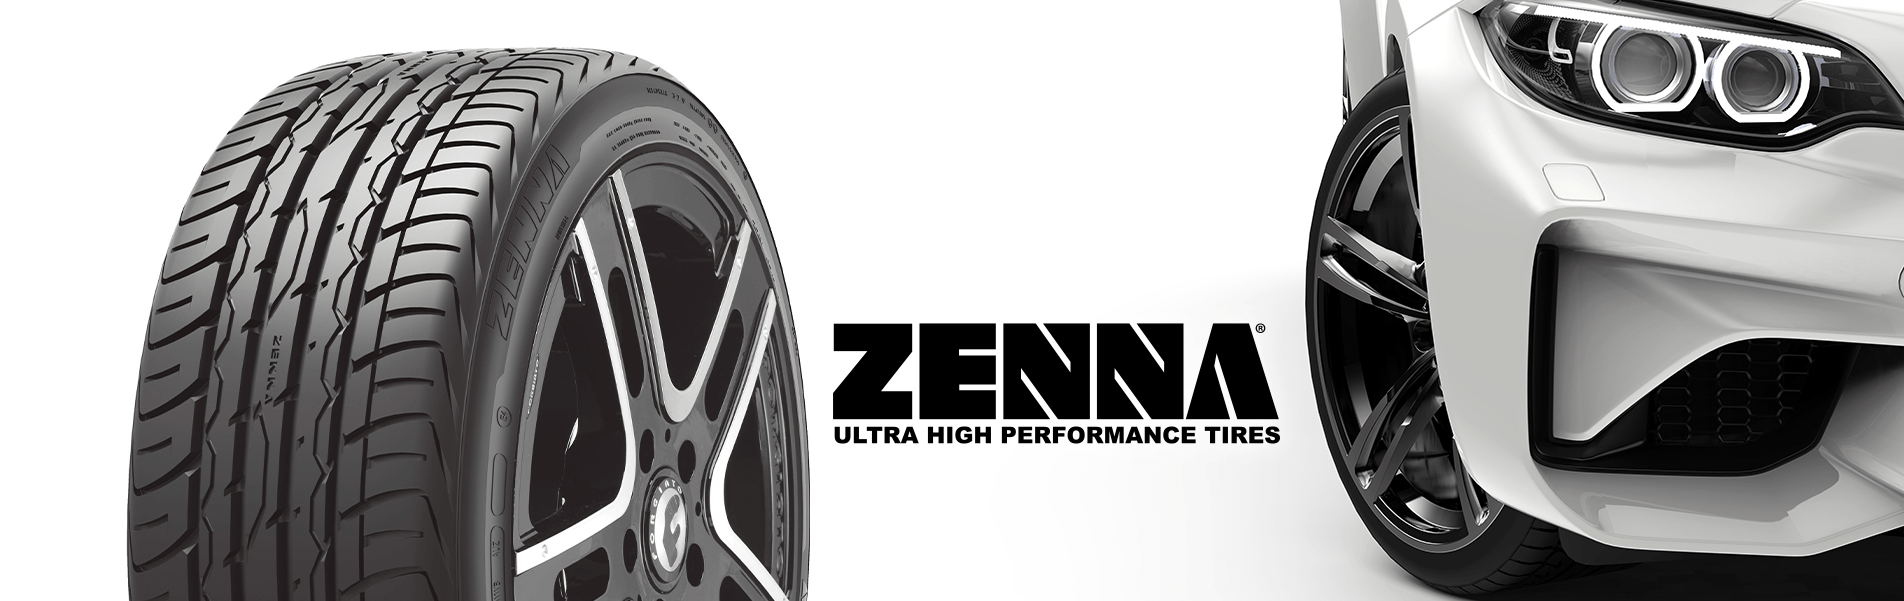 Zenna UHP tires